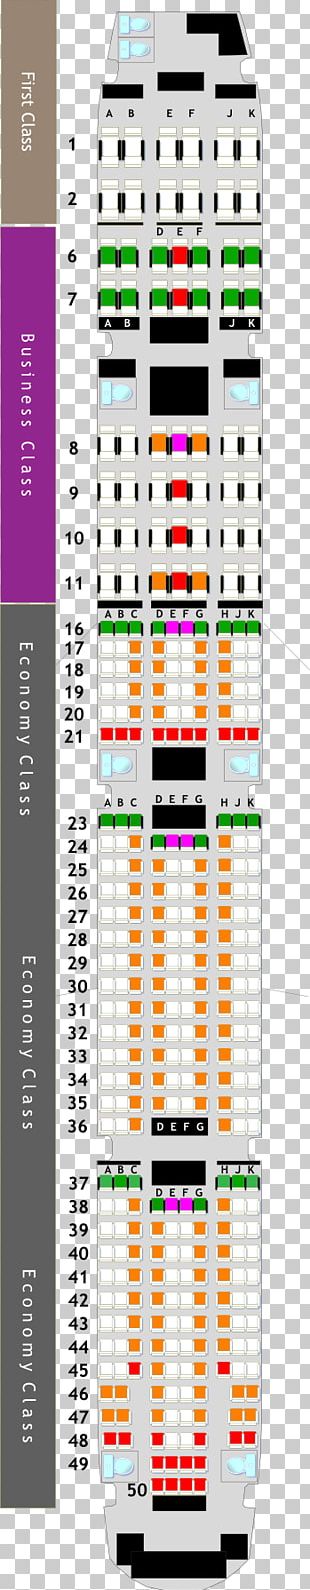 Delta Boeing 777 300er Seat Map Infoupdate Wallpaper Images